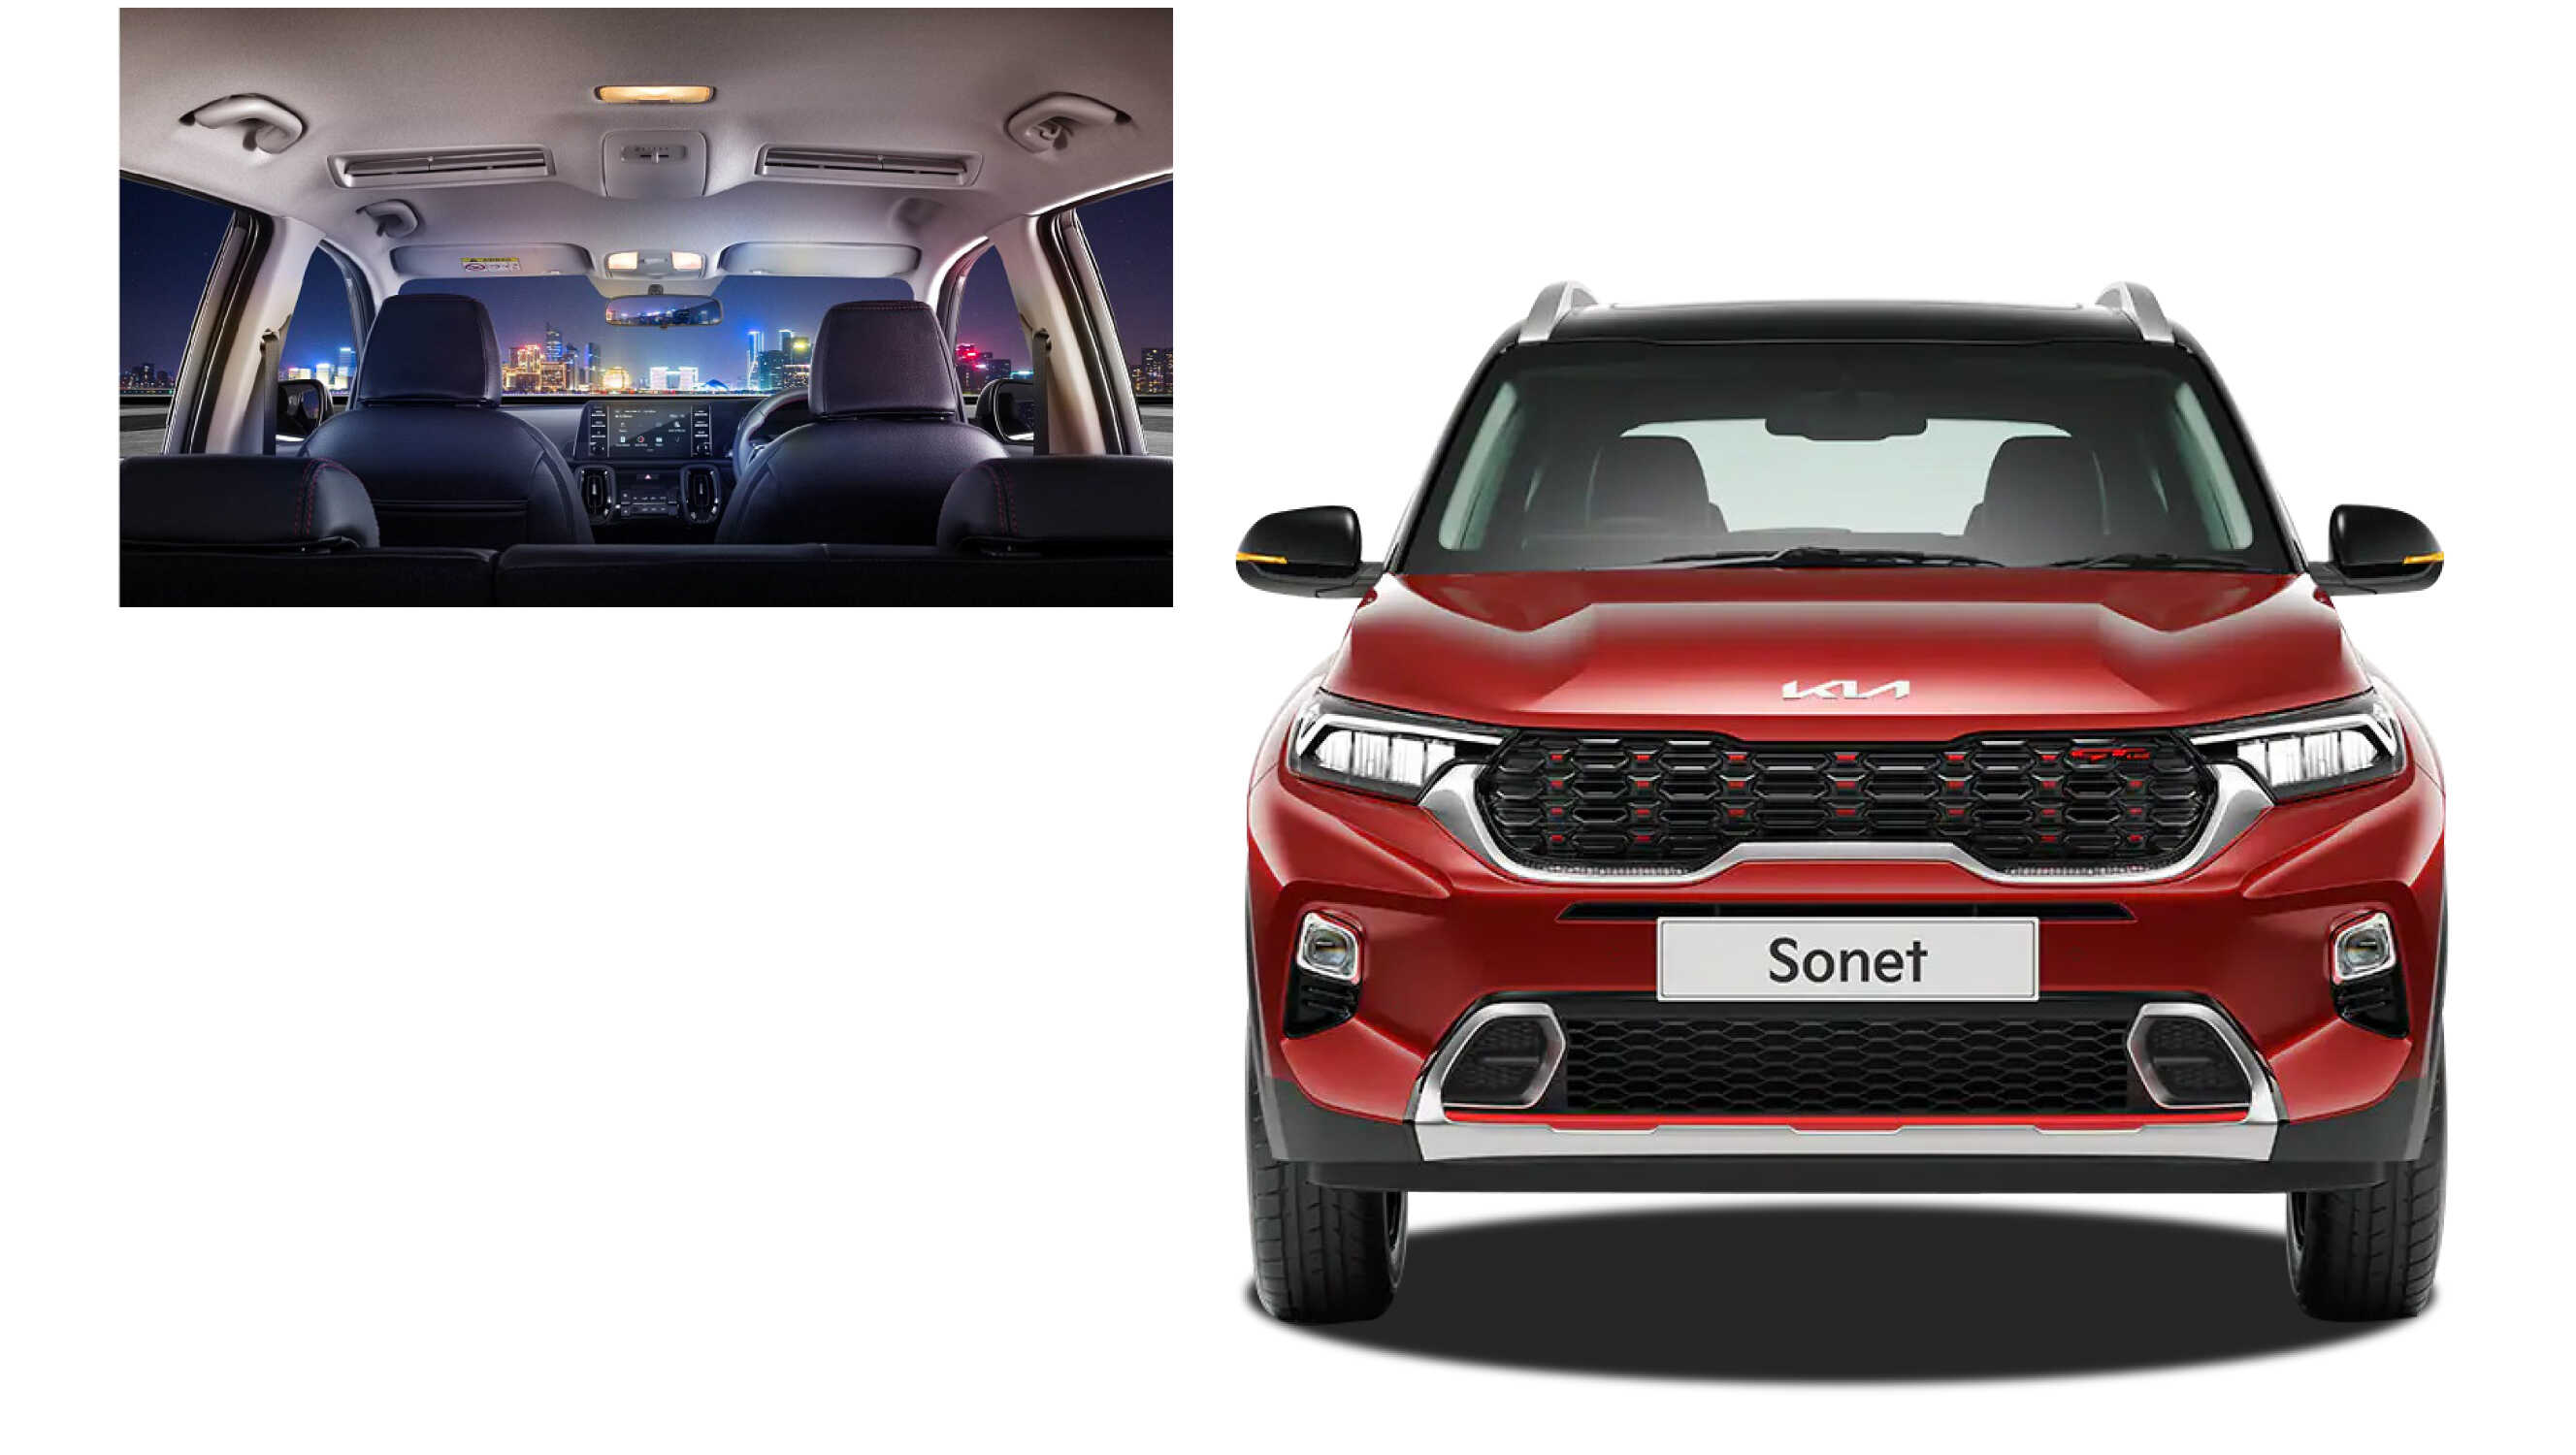 Interior and exterior of Sonet, a Kia car for India